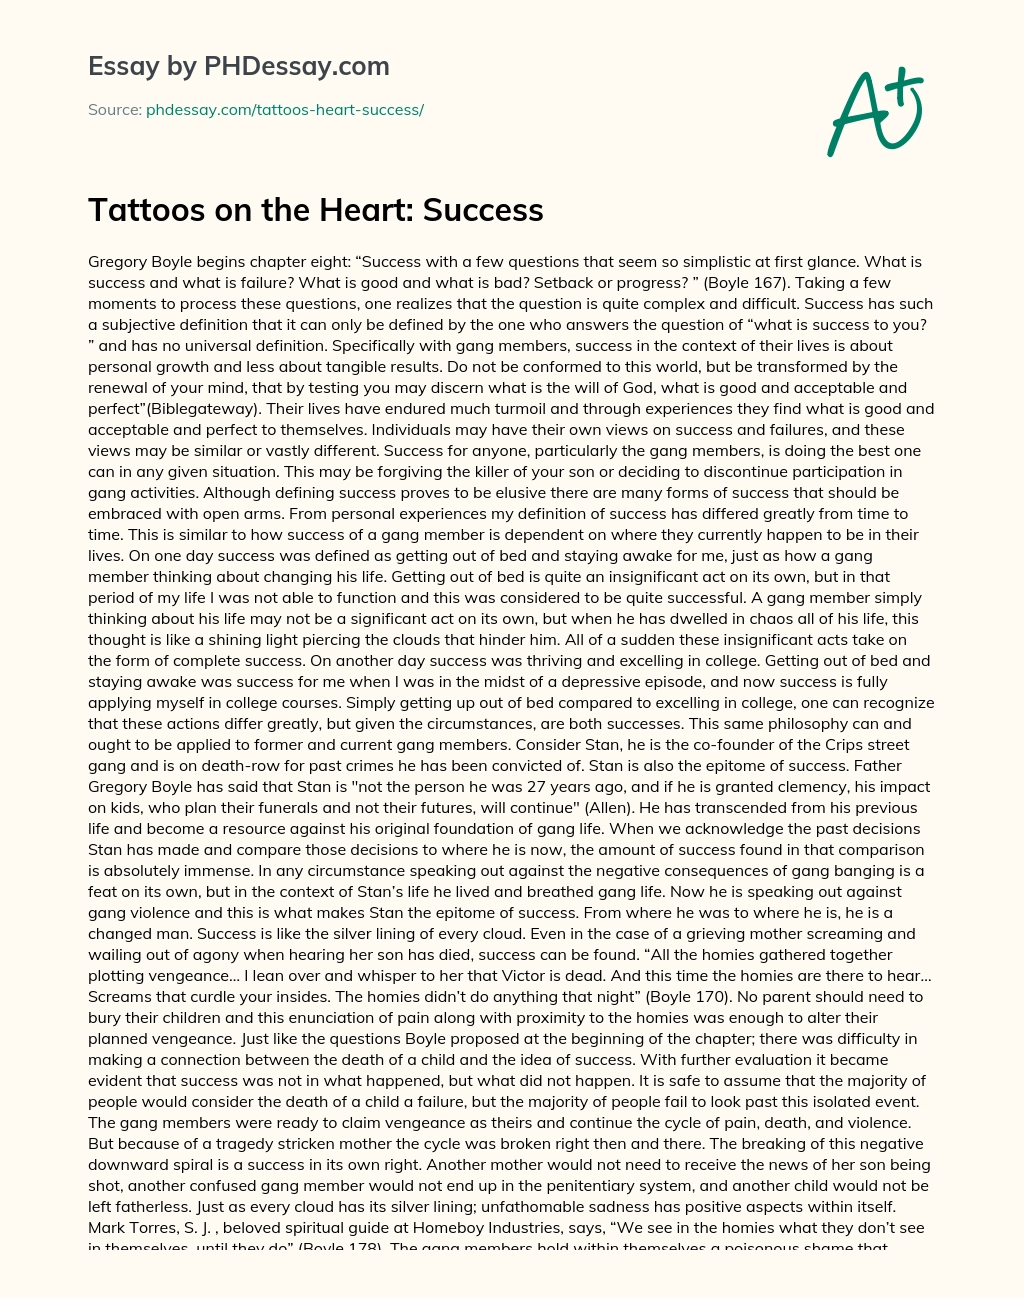 Tattoos on the Heart: Success essay